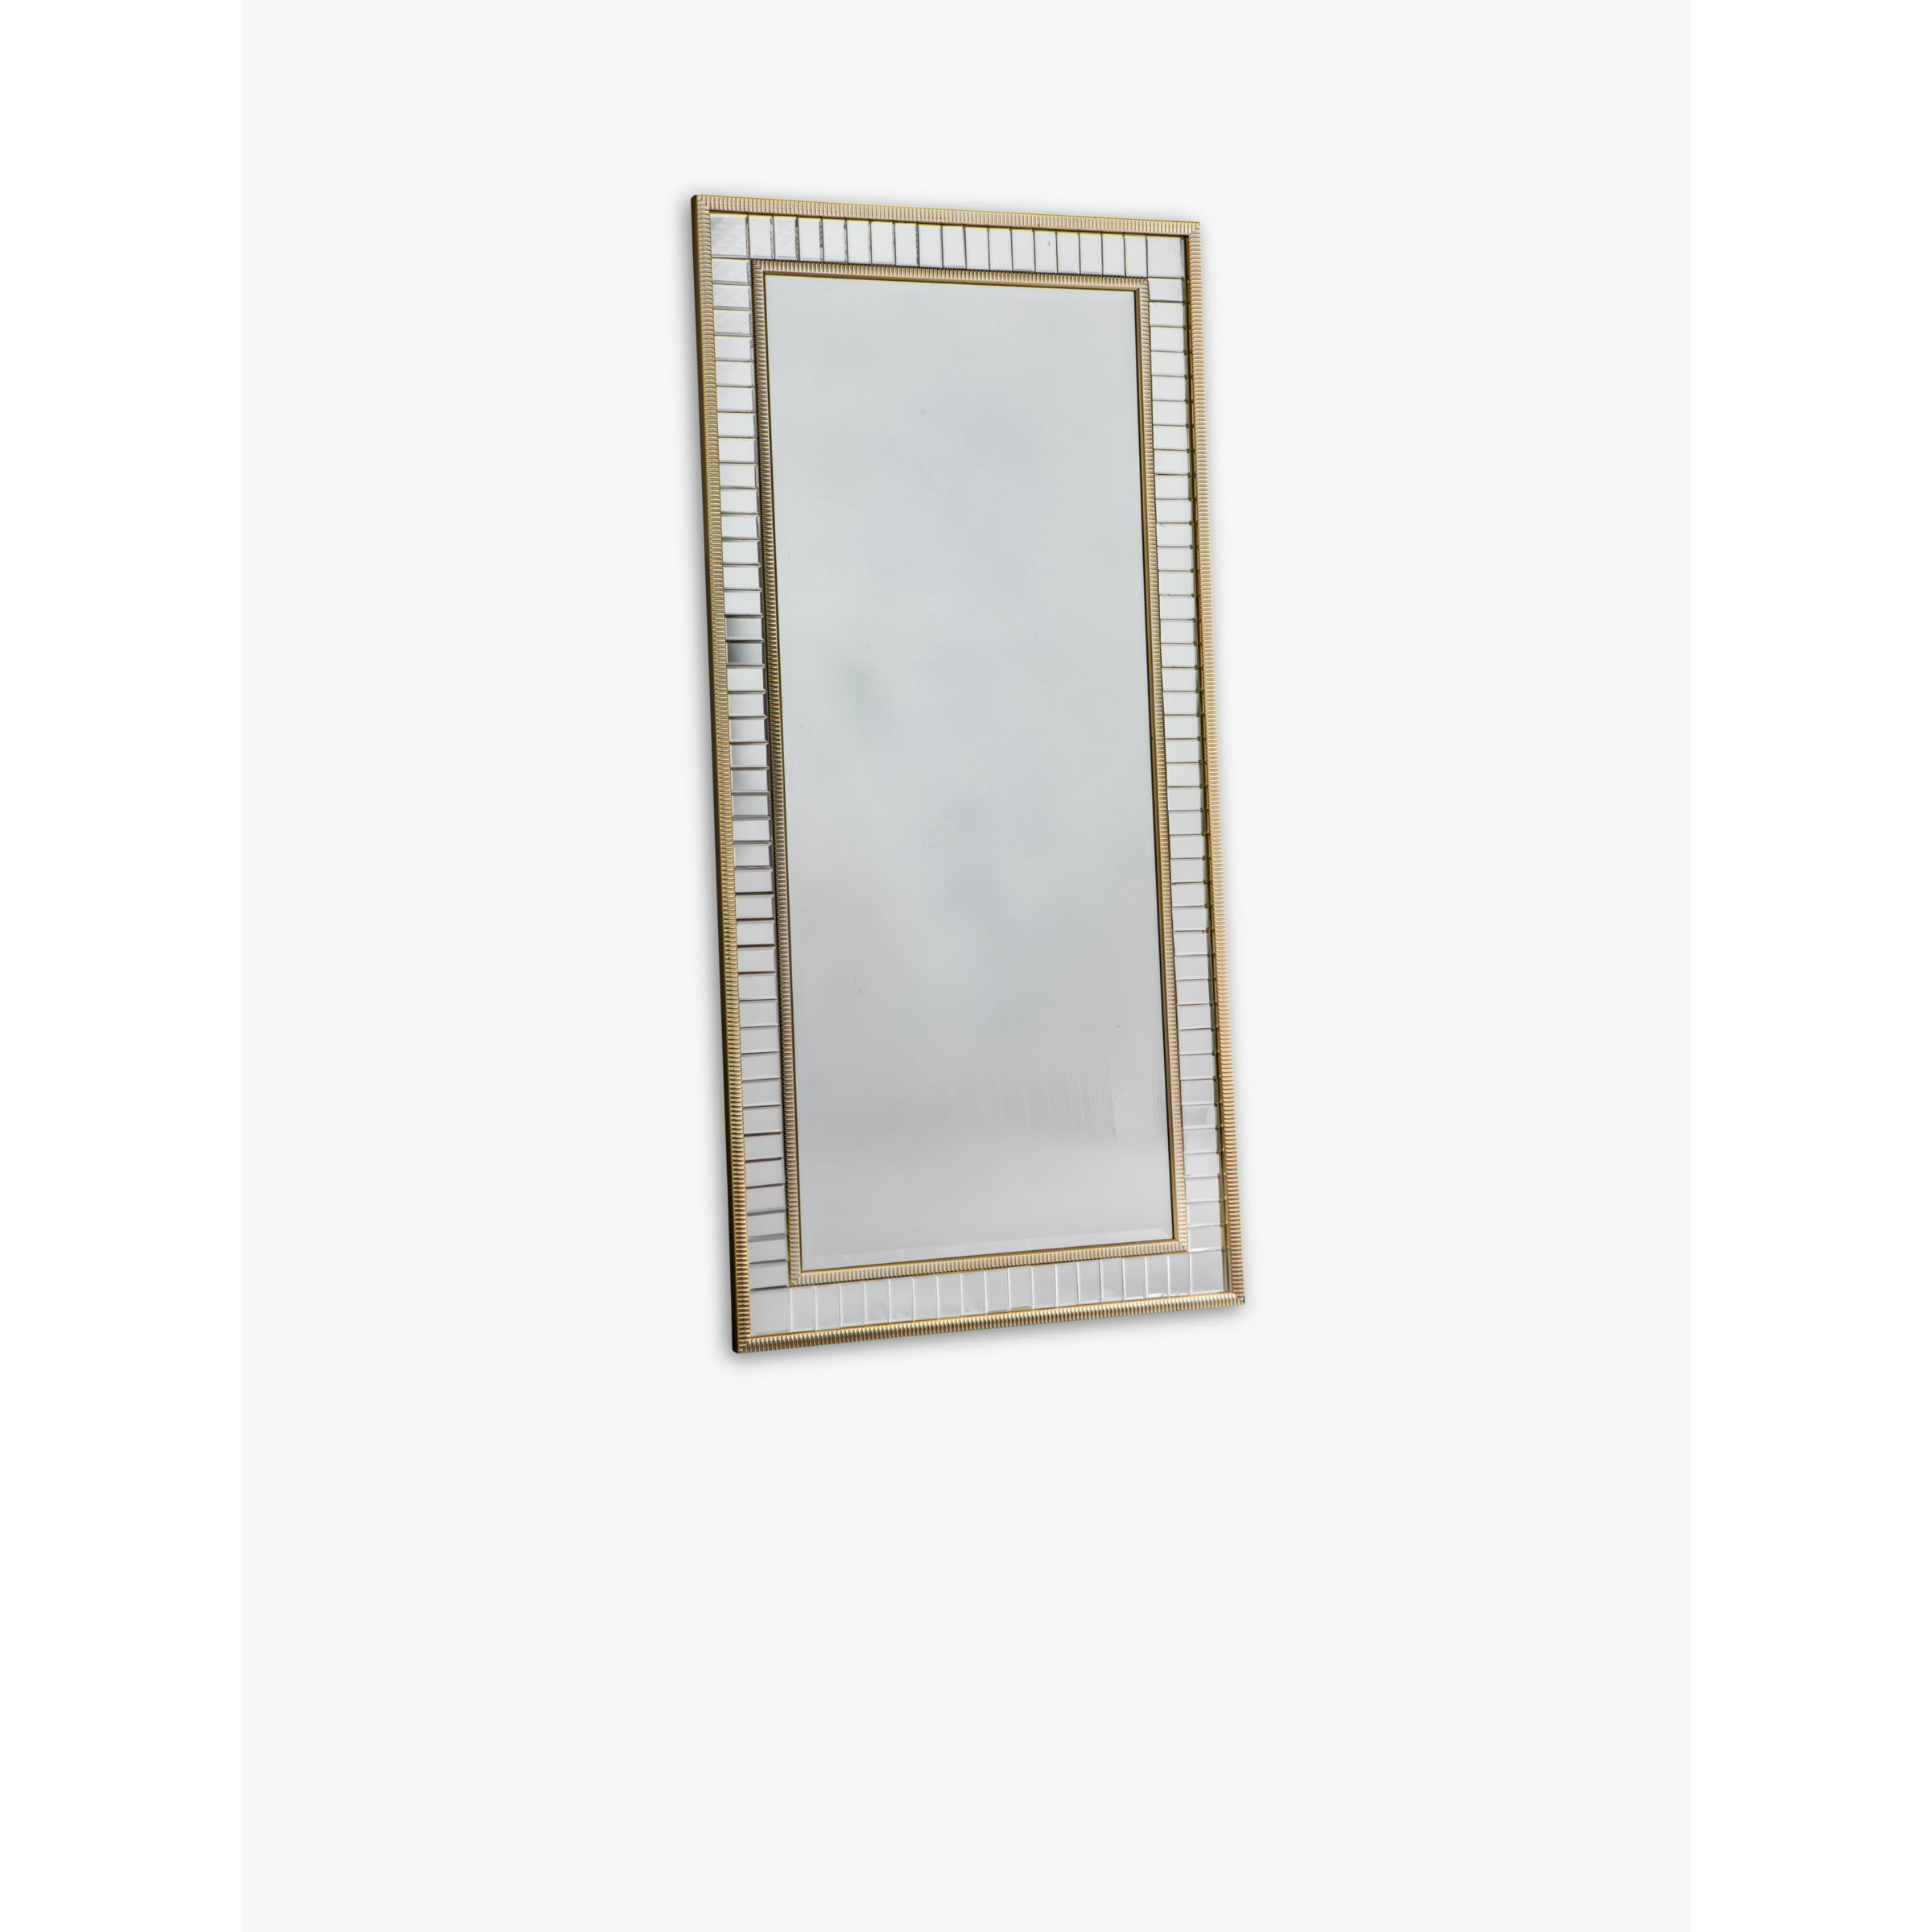 Gallery Direct Carlota Rectangular Bevelled Glass Frame Leaner / Wall Mirror, 156 x 76cm, Gold - image 1